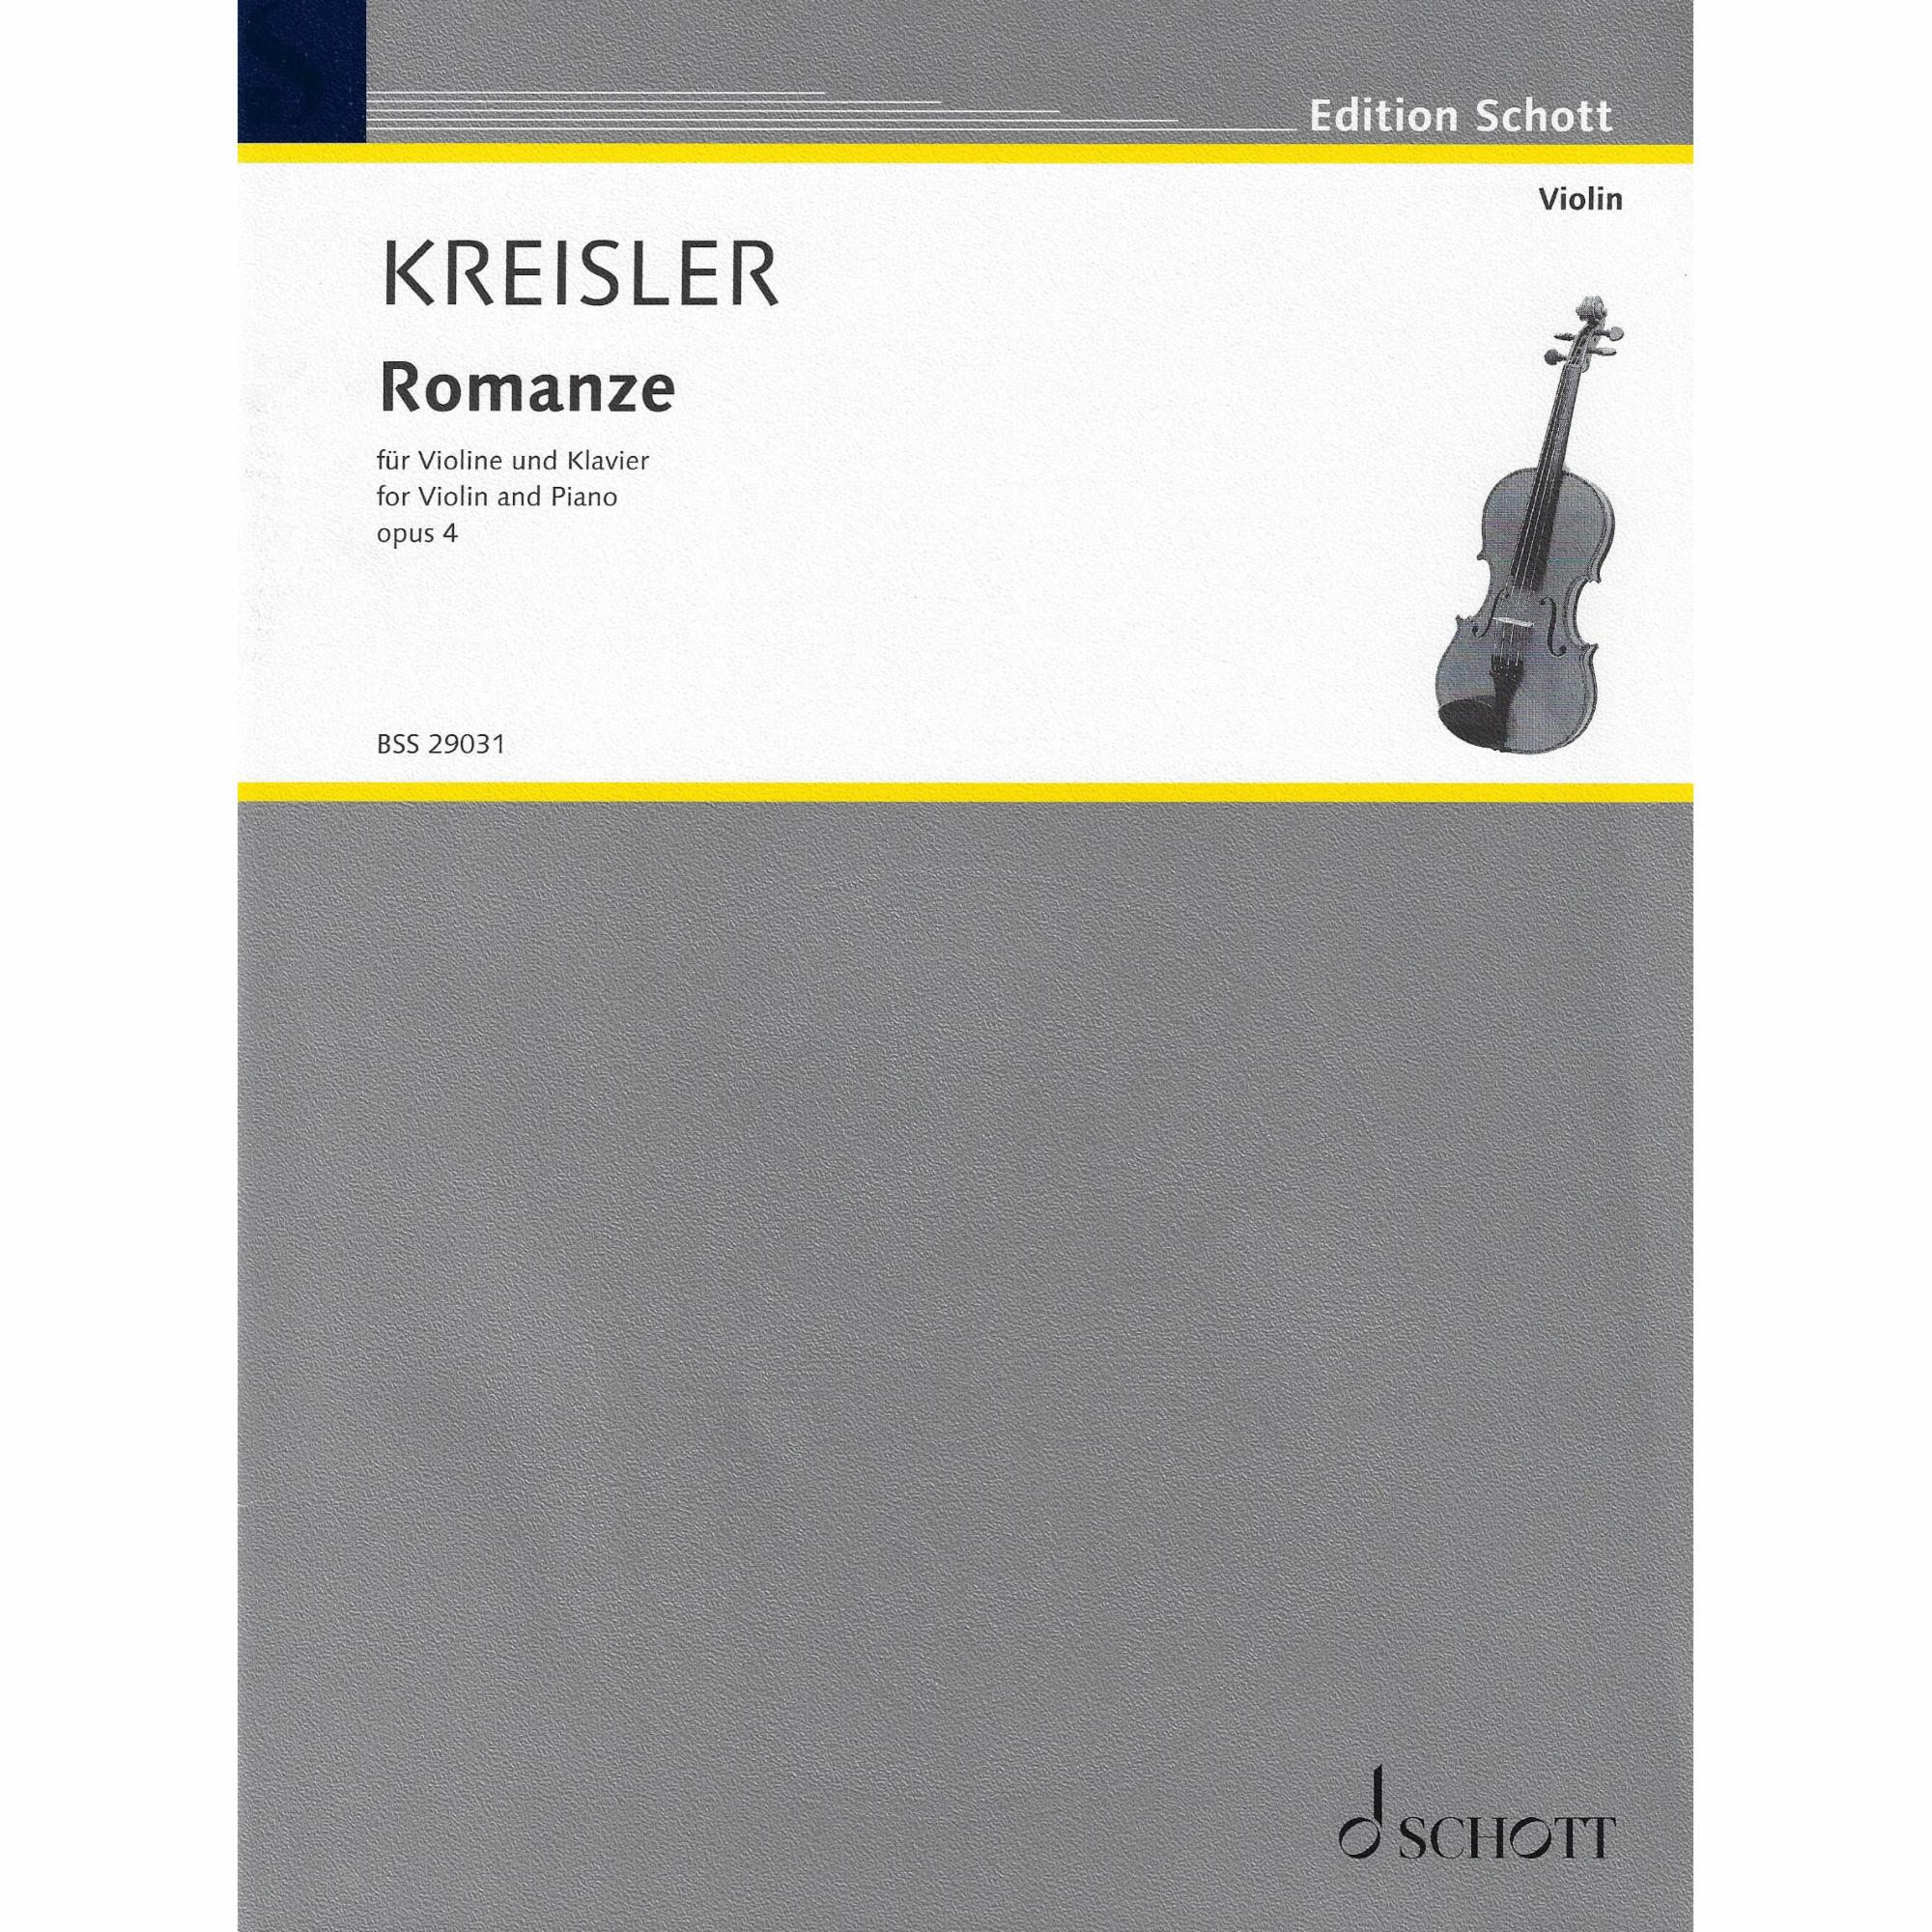 Kreisler -- Romance, Op. 4 for Violin and Piano